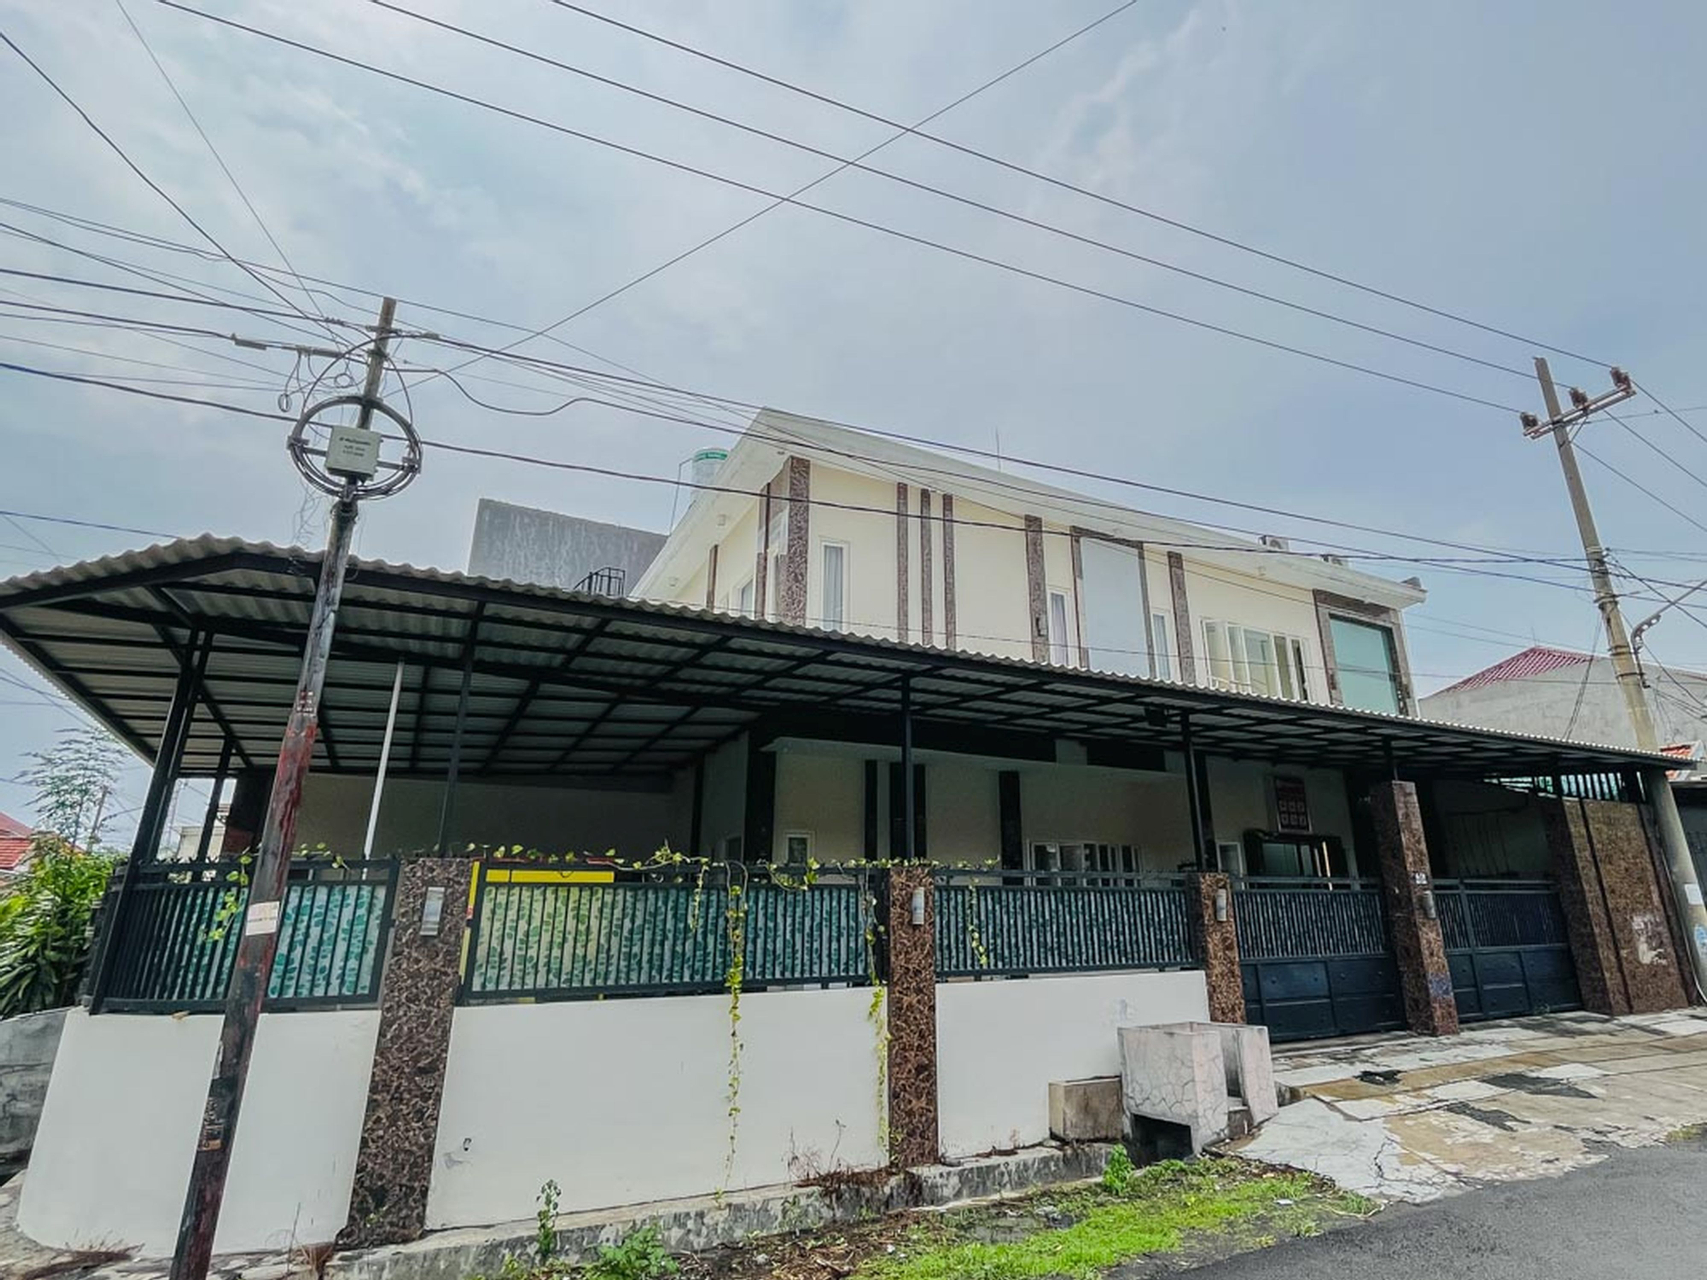 Exterior & Views 3, RedDoorz @ Ngagel Jaya Surabaya, Surabaya